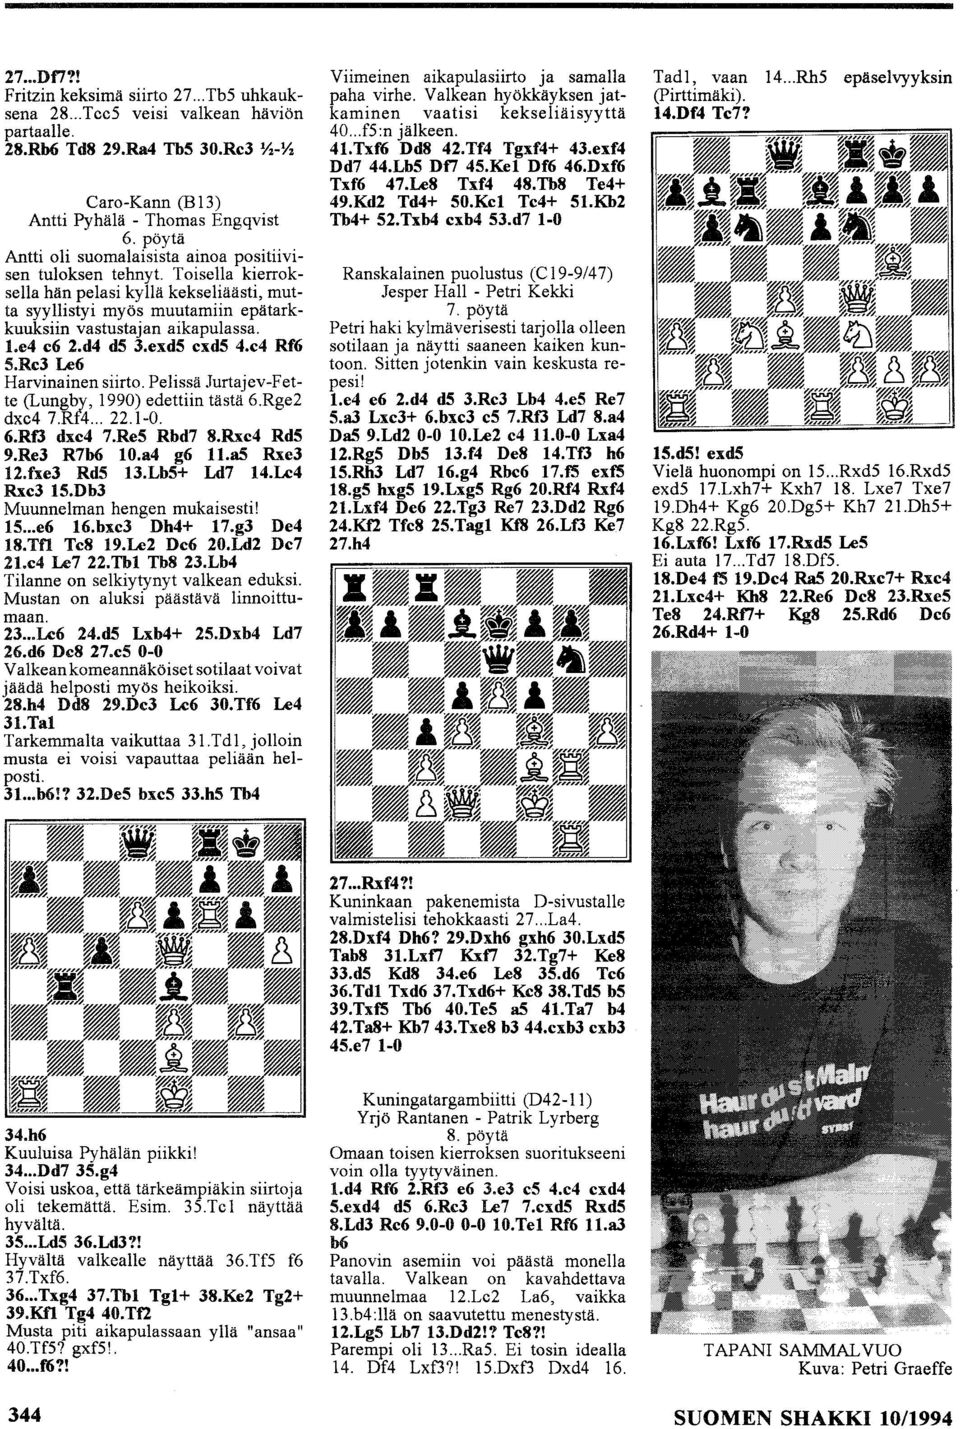 e4 e6 2.d4 d5 3.exd5 exd5 4.e4 Rf6 5.Re3 Le6 Harvinainen siirto. Pelissä Jurtajev-Fette (Lungby, 1990) edettiin tästä 6.Rge2 dxc4 7.Rf4... 22.1-0. 6.Rf3 dxe4 7.Re5 Rbd7 8.Rxe4 Rd5 9.Re3 R7b6 10.